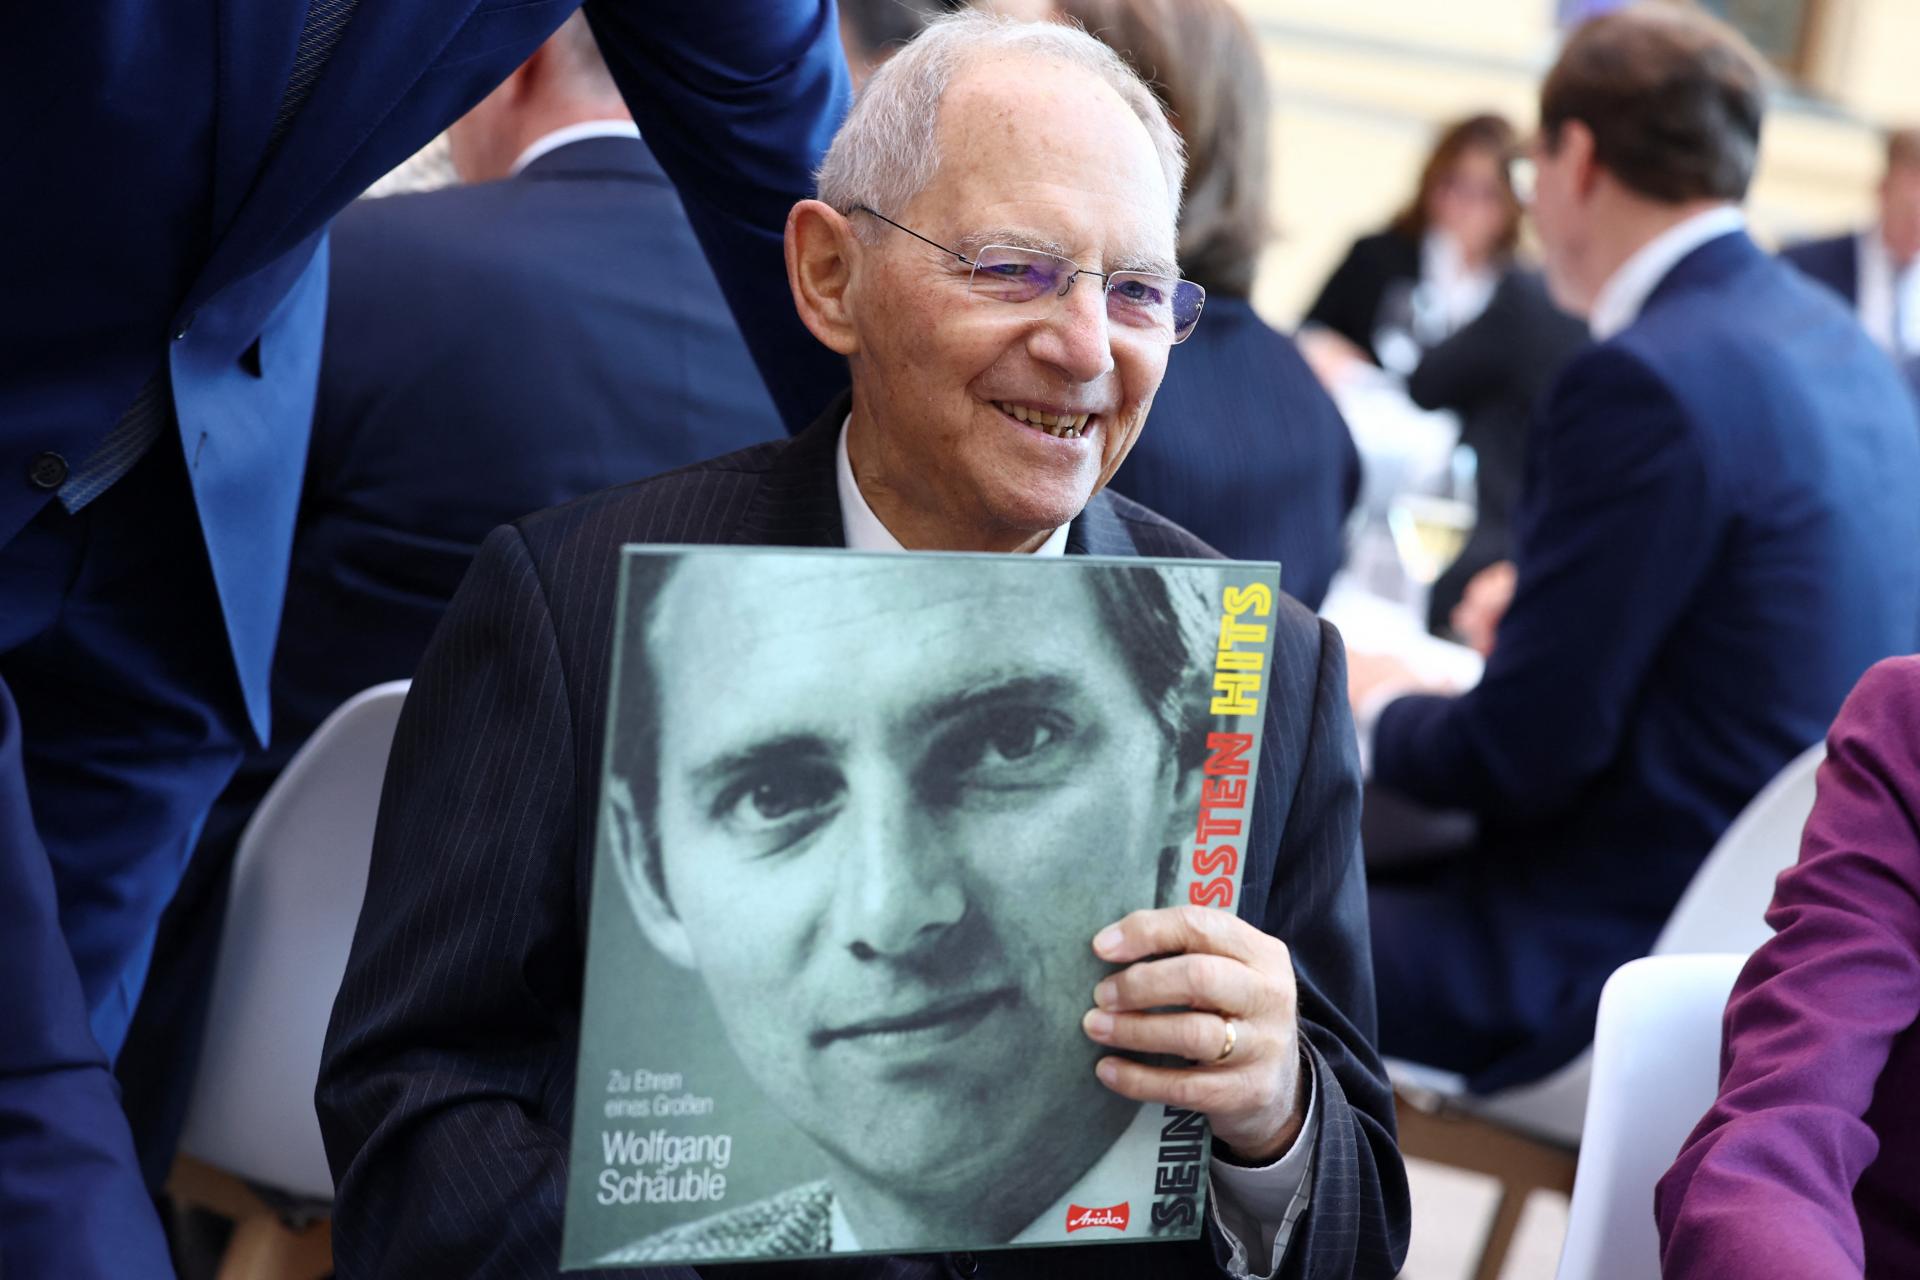 Zomrel veterán nemeckej politiky a bývalý minister financií Wolfgang Schäuble